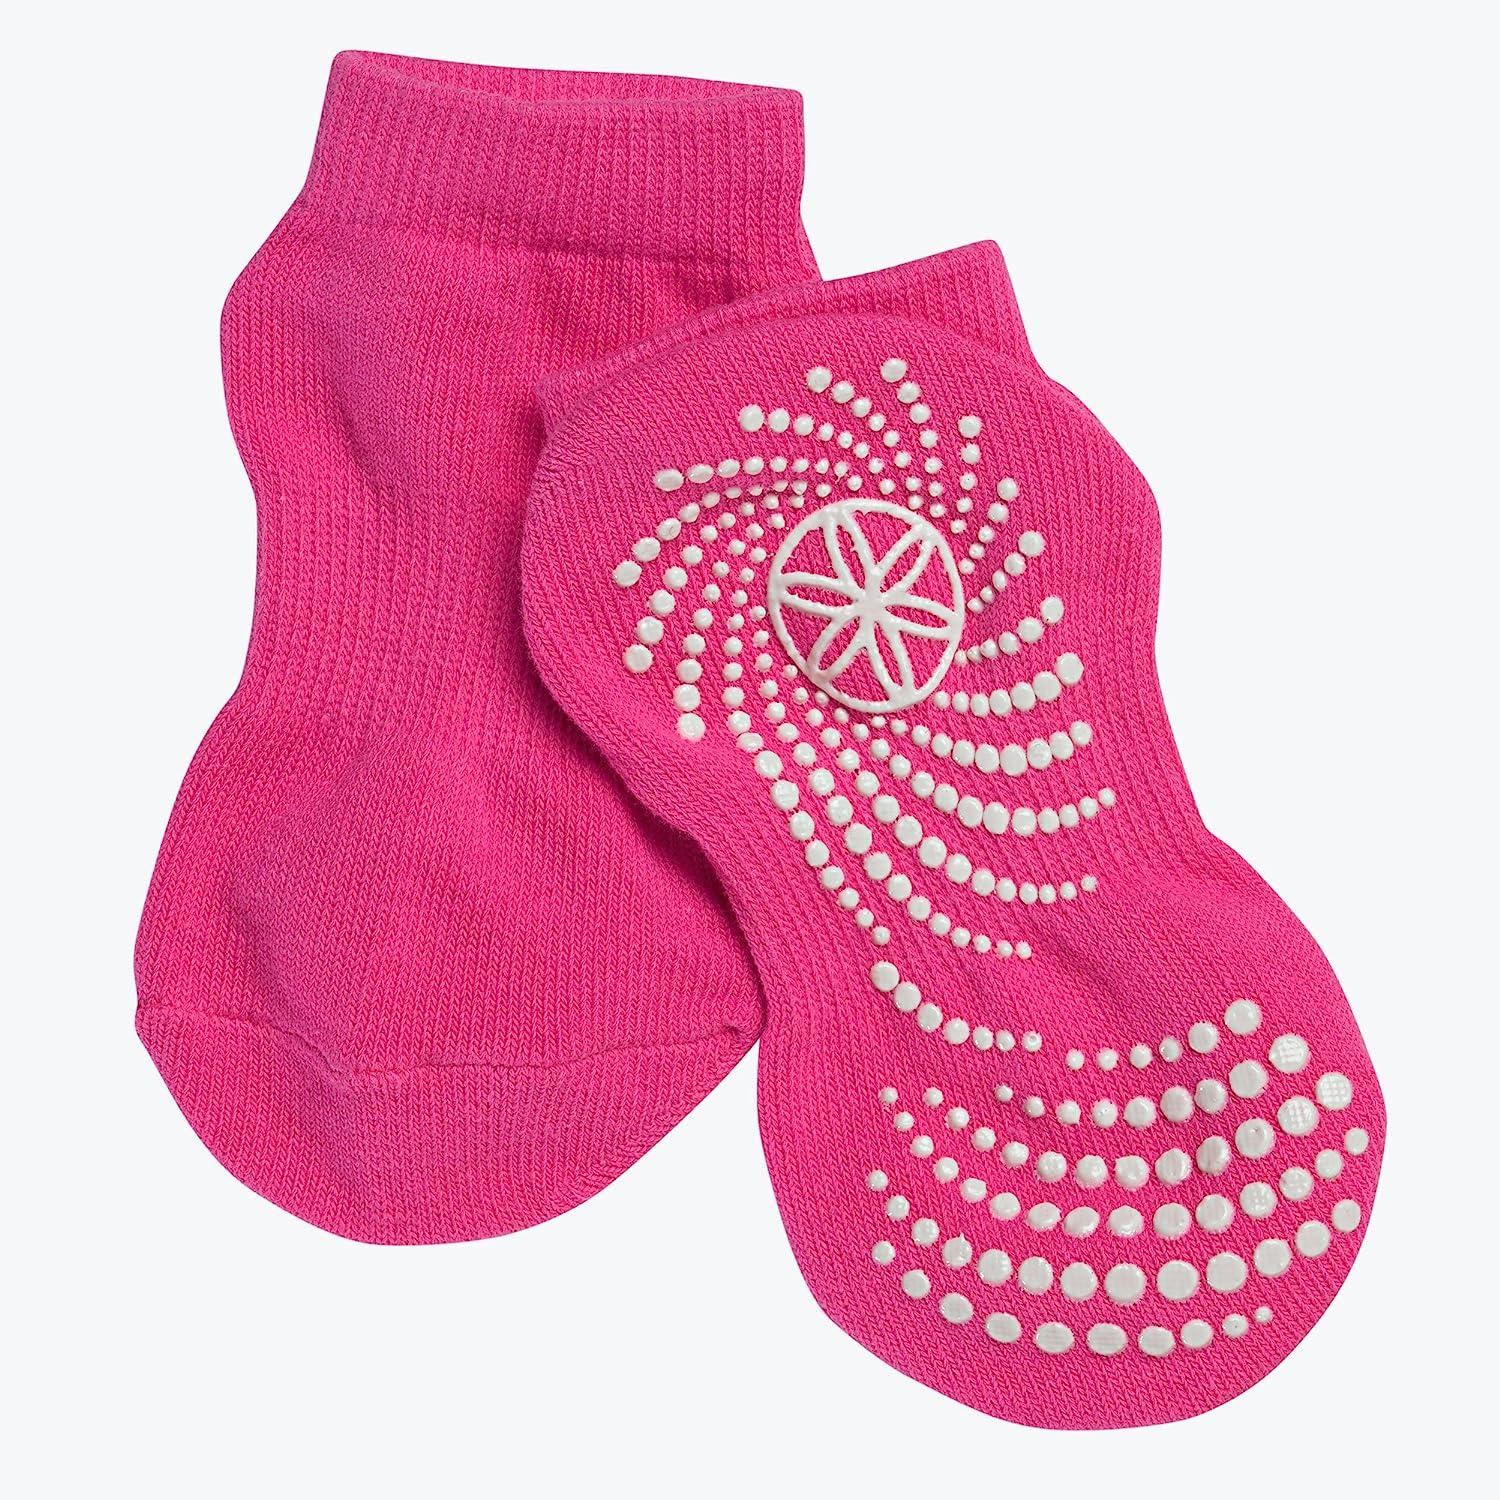 Gaiam Kids Yoga Socks (Pack of 2)